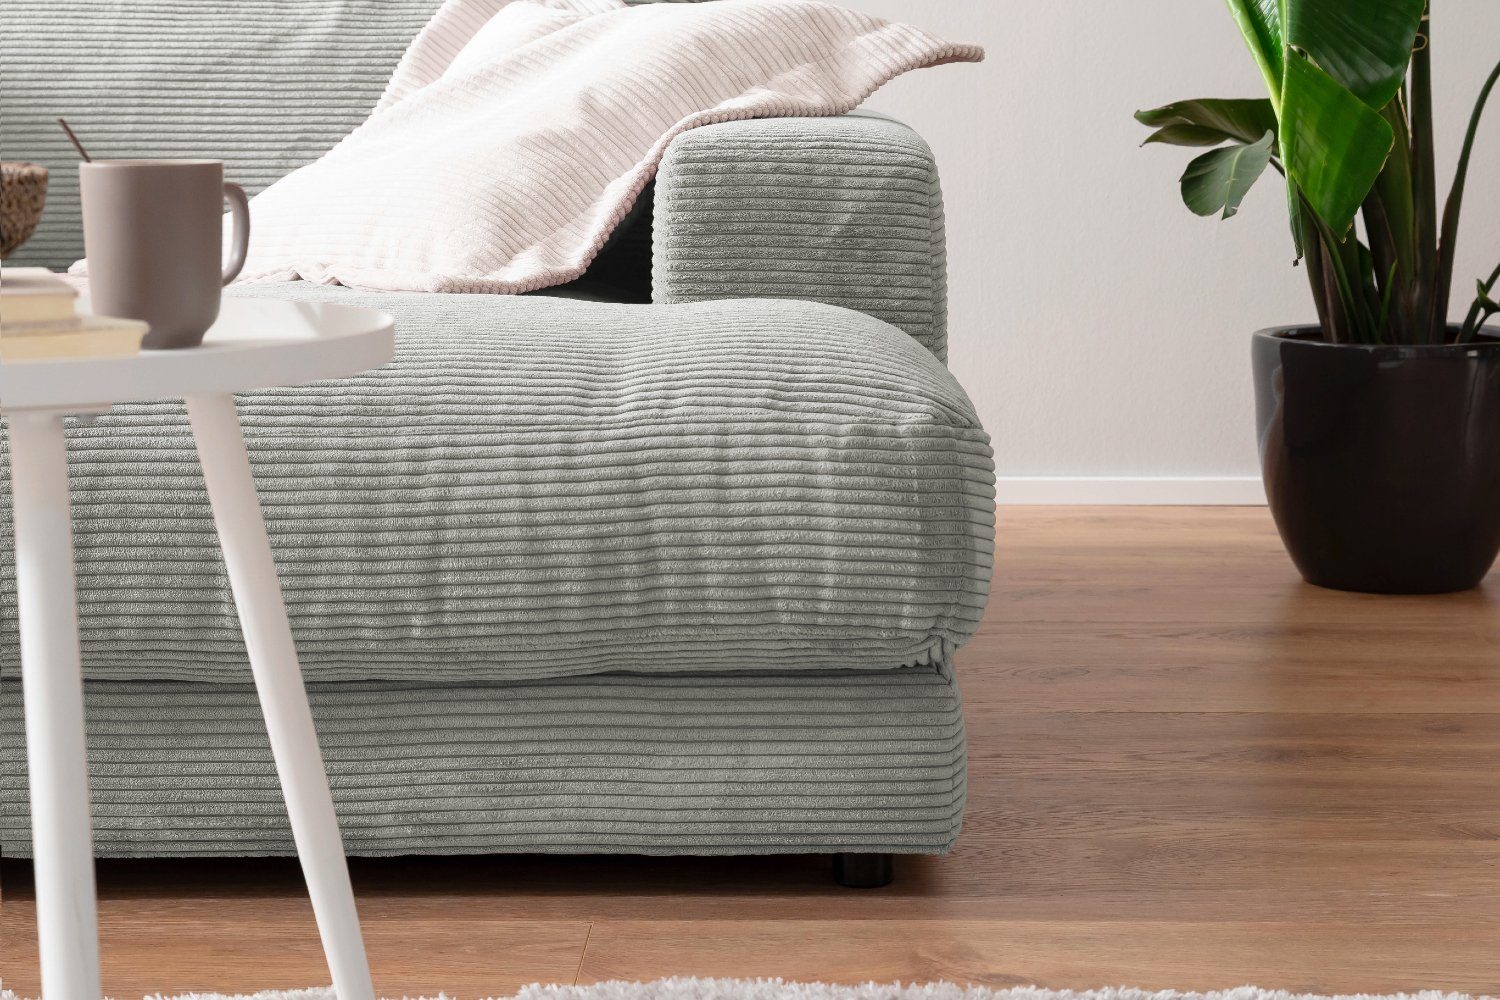 KAWOLA Big-Sofa Sofa MADELINE, od. Stoff Farben verschiedene Cord